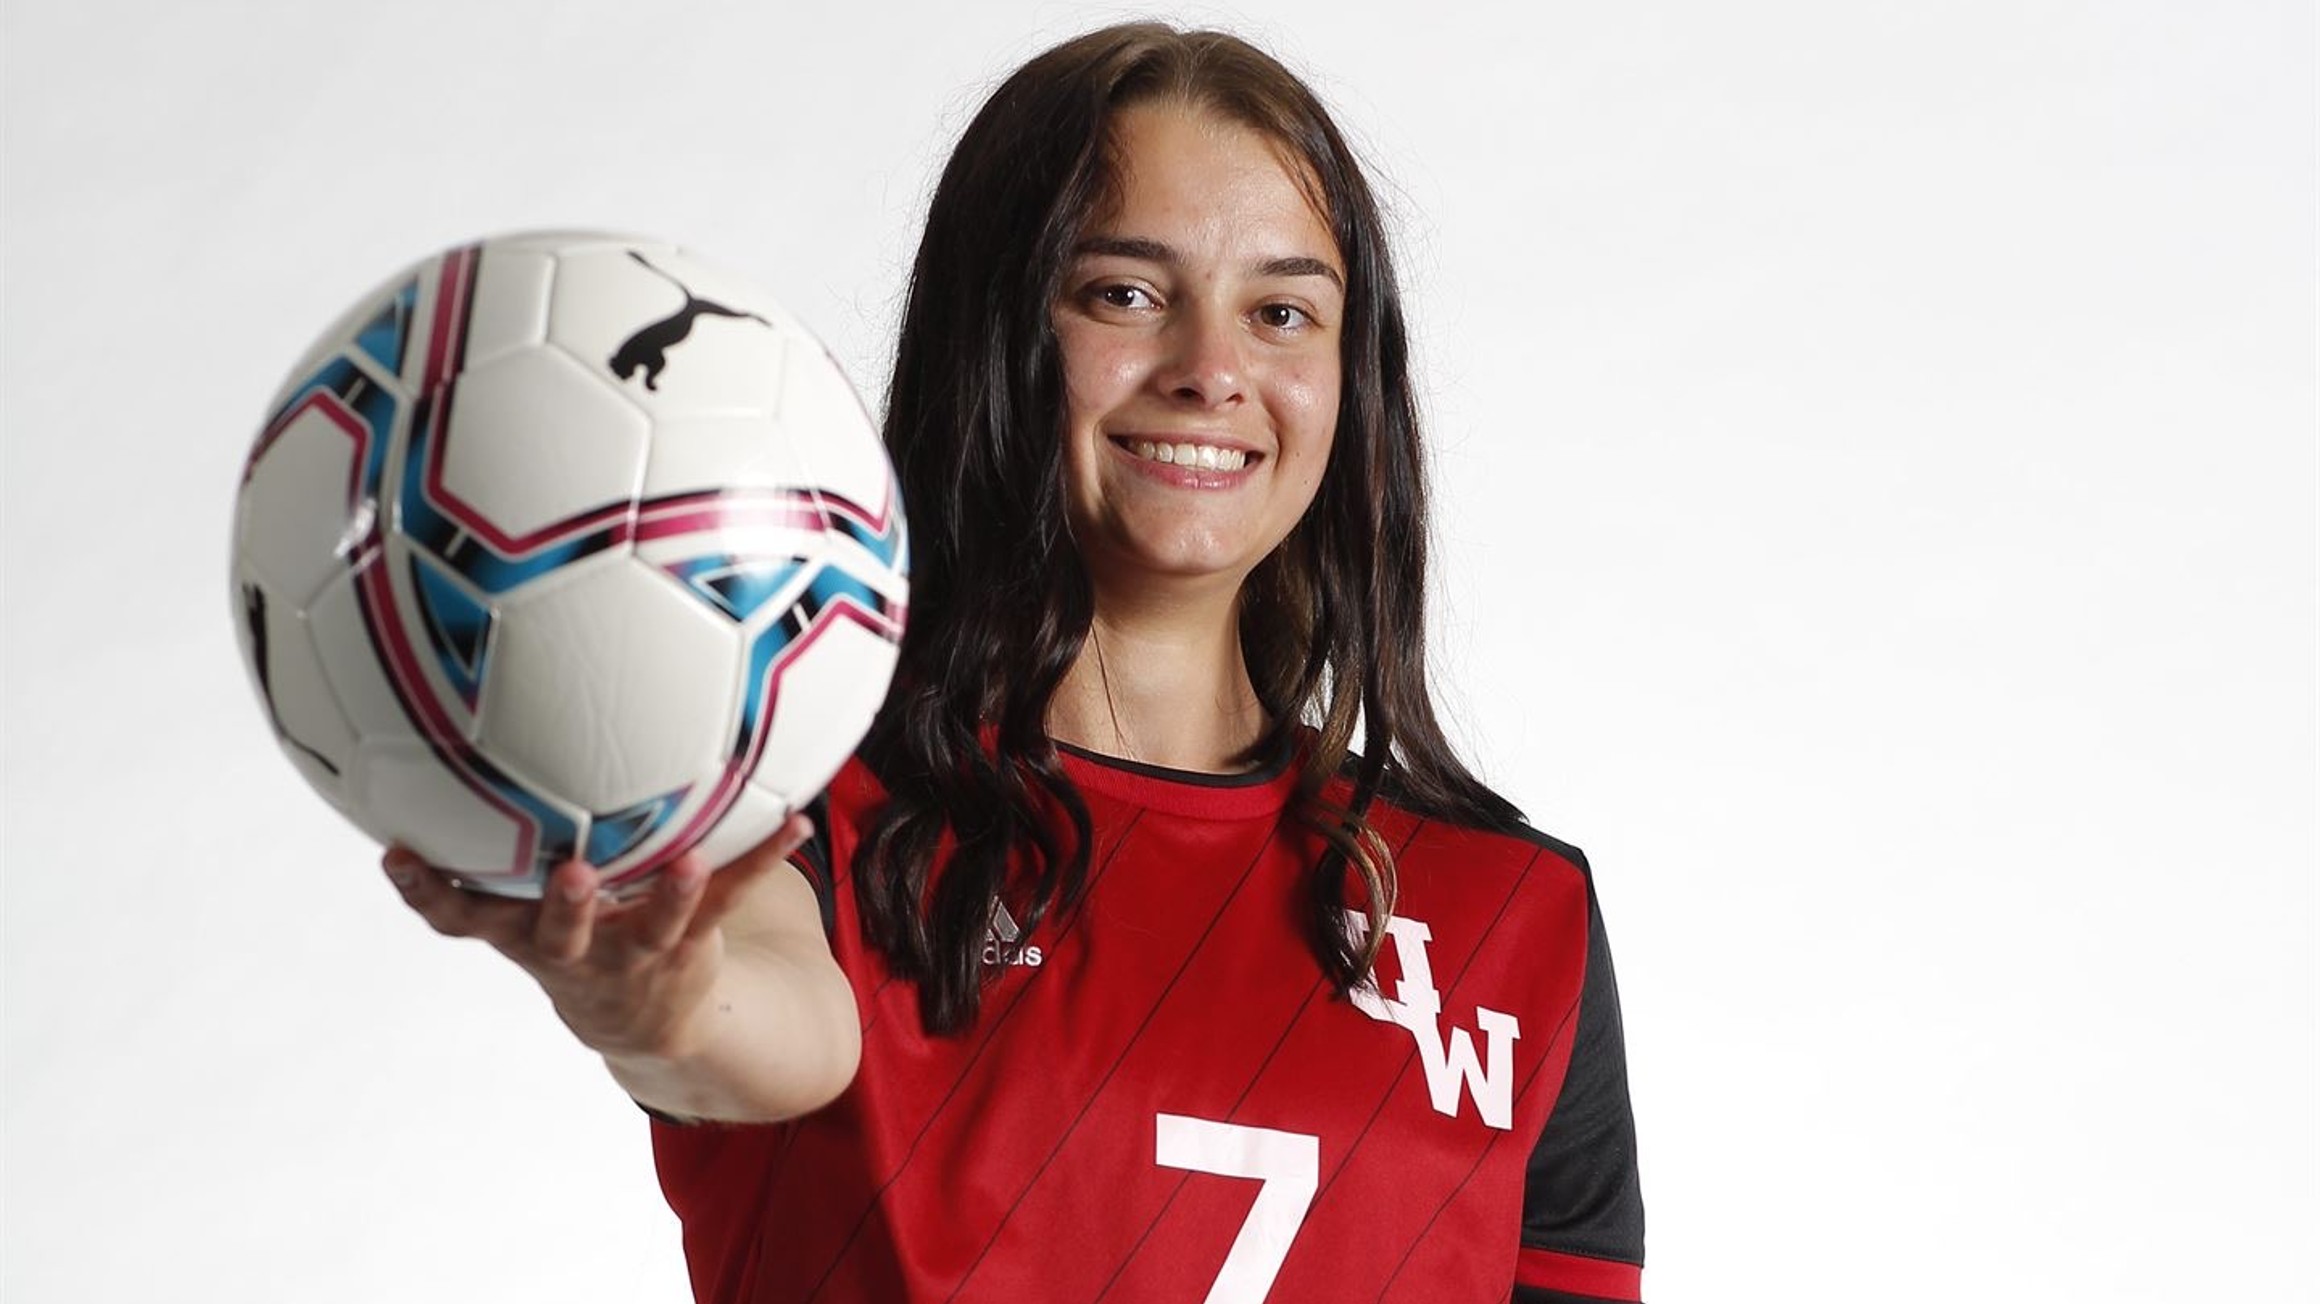 UWinnipeg student-athlete Emma Friesen holding a soccer ball while wearing a Wesmen Athletics jersey.